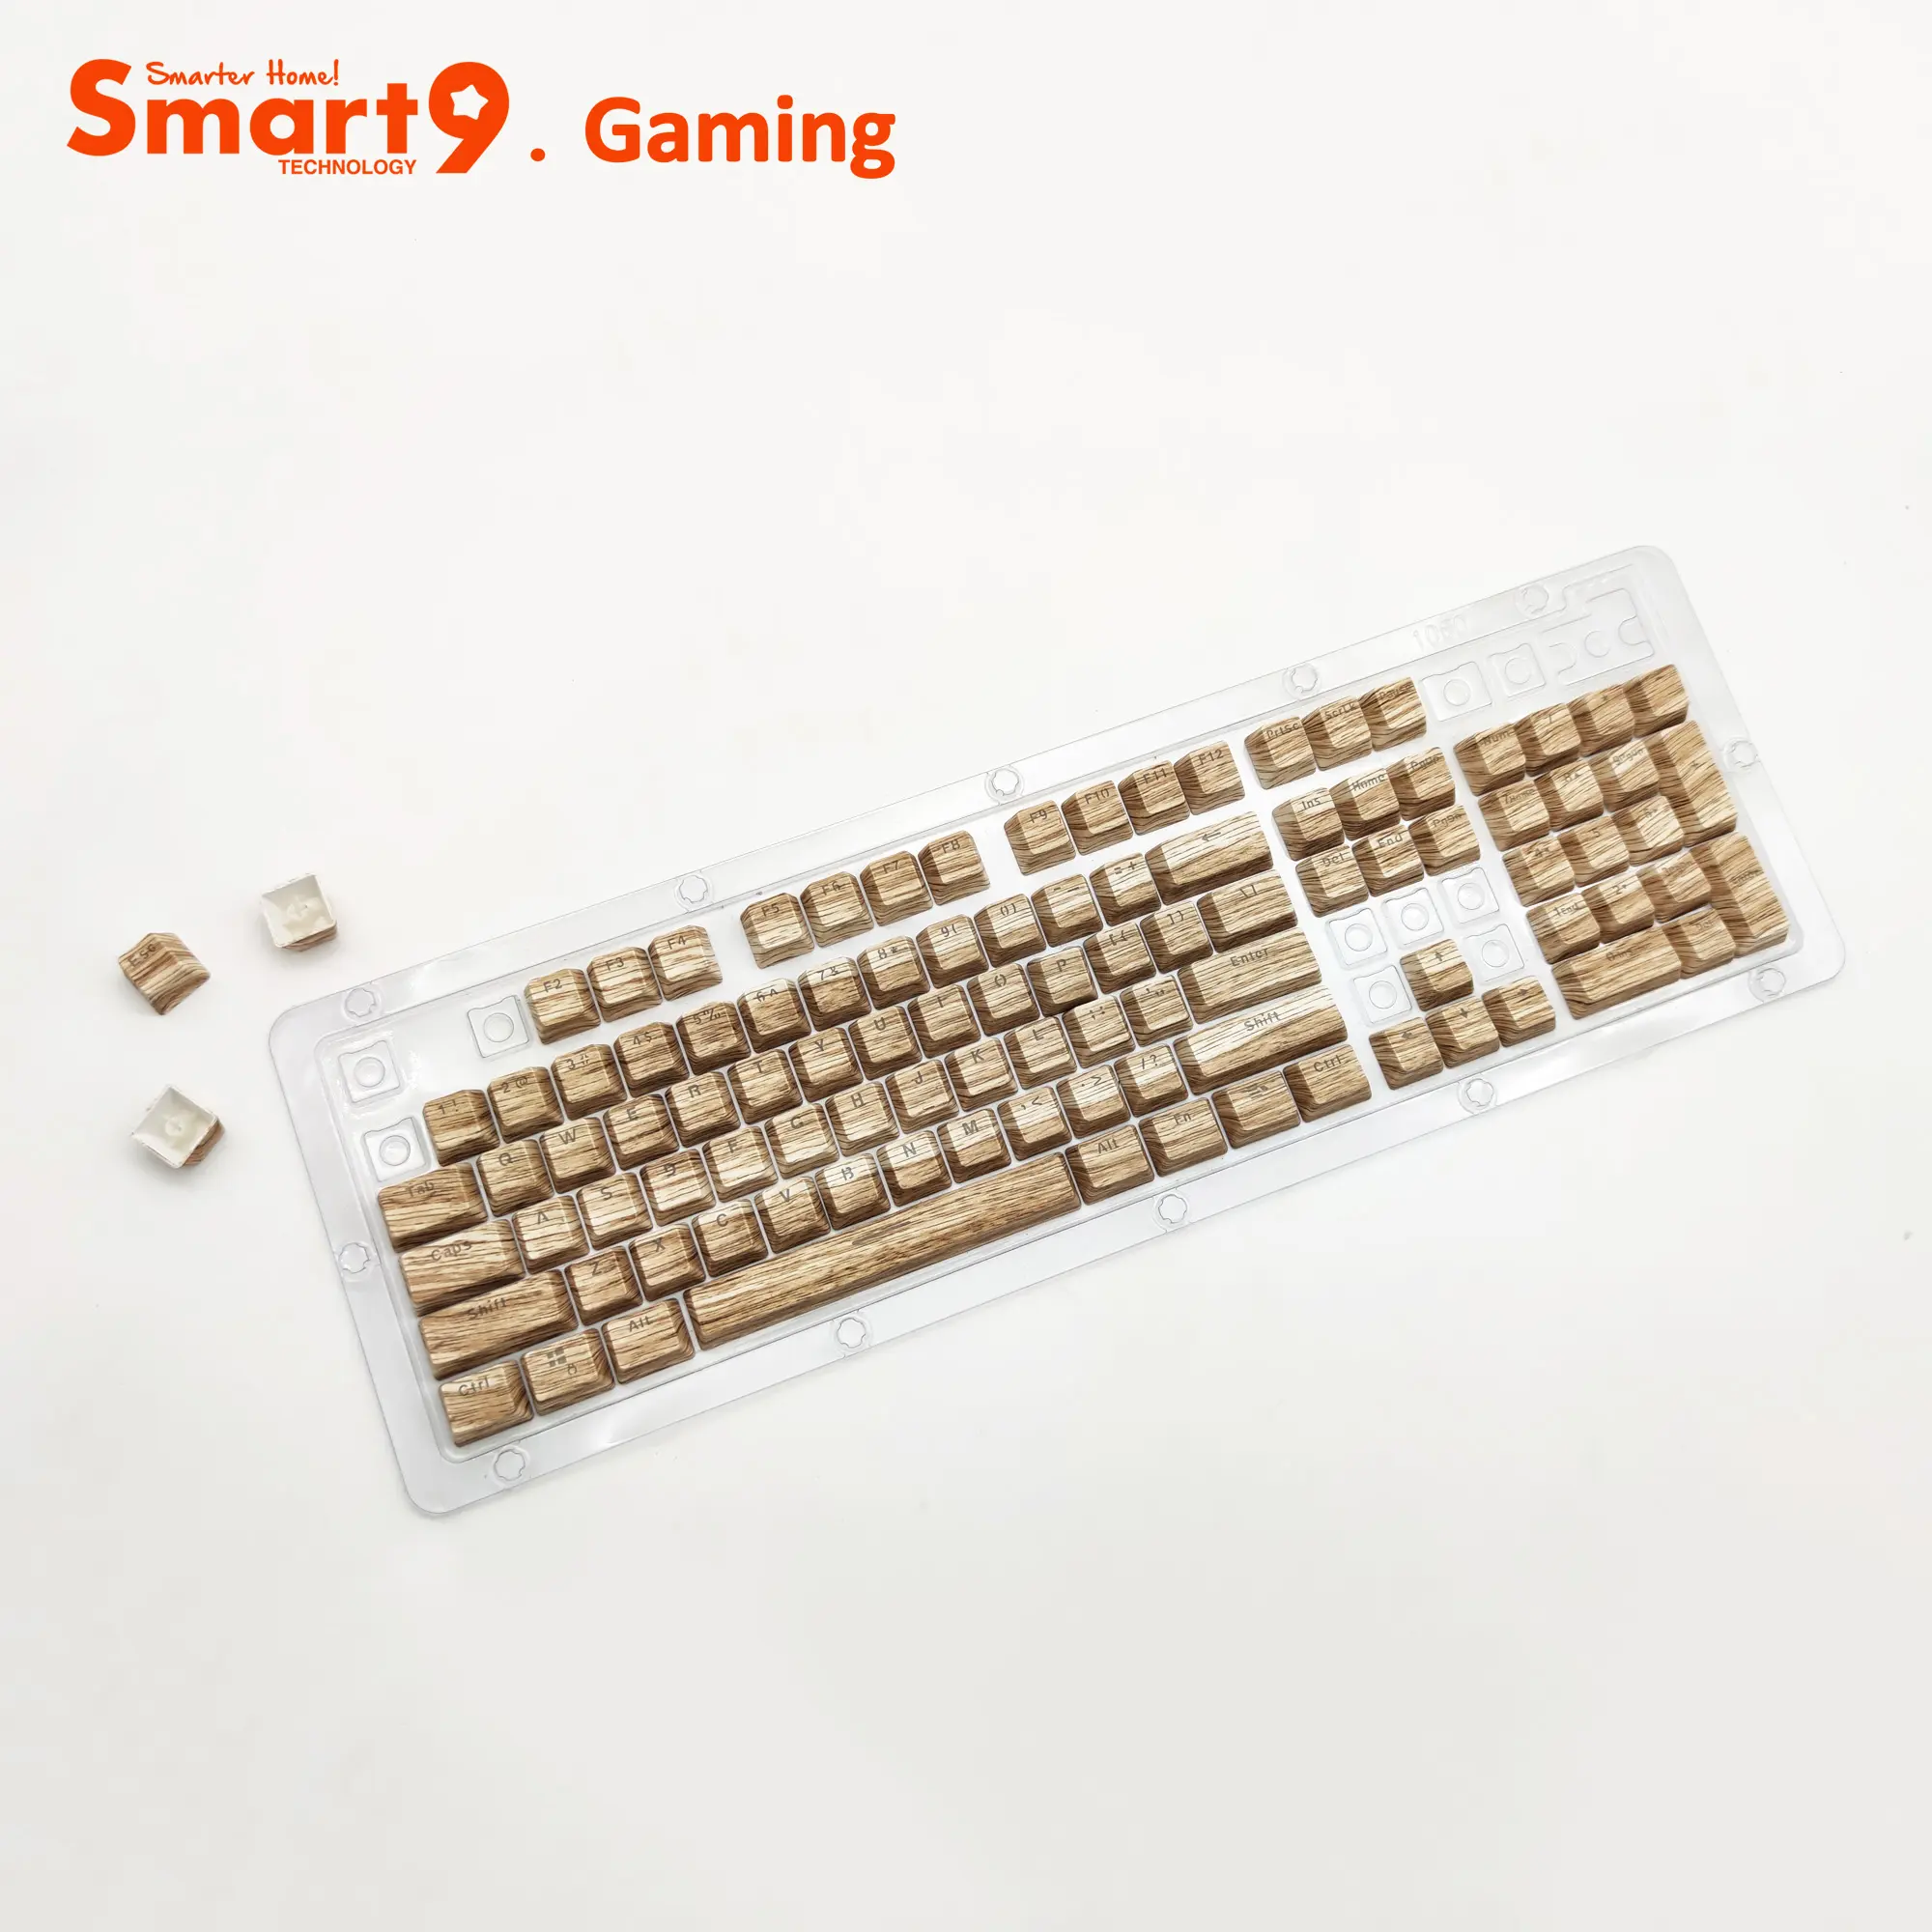 Smart9 लकड़ी जल प्रिंट डबल शॉट एबीएस पीबीटी Keycaps रंगीन वायर्ड वायरलेस यांत्रिक गेमिंग कीबोर्ड के लिए